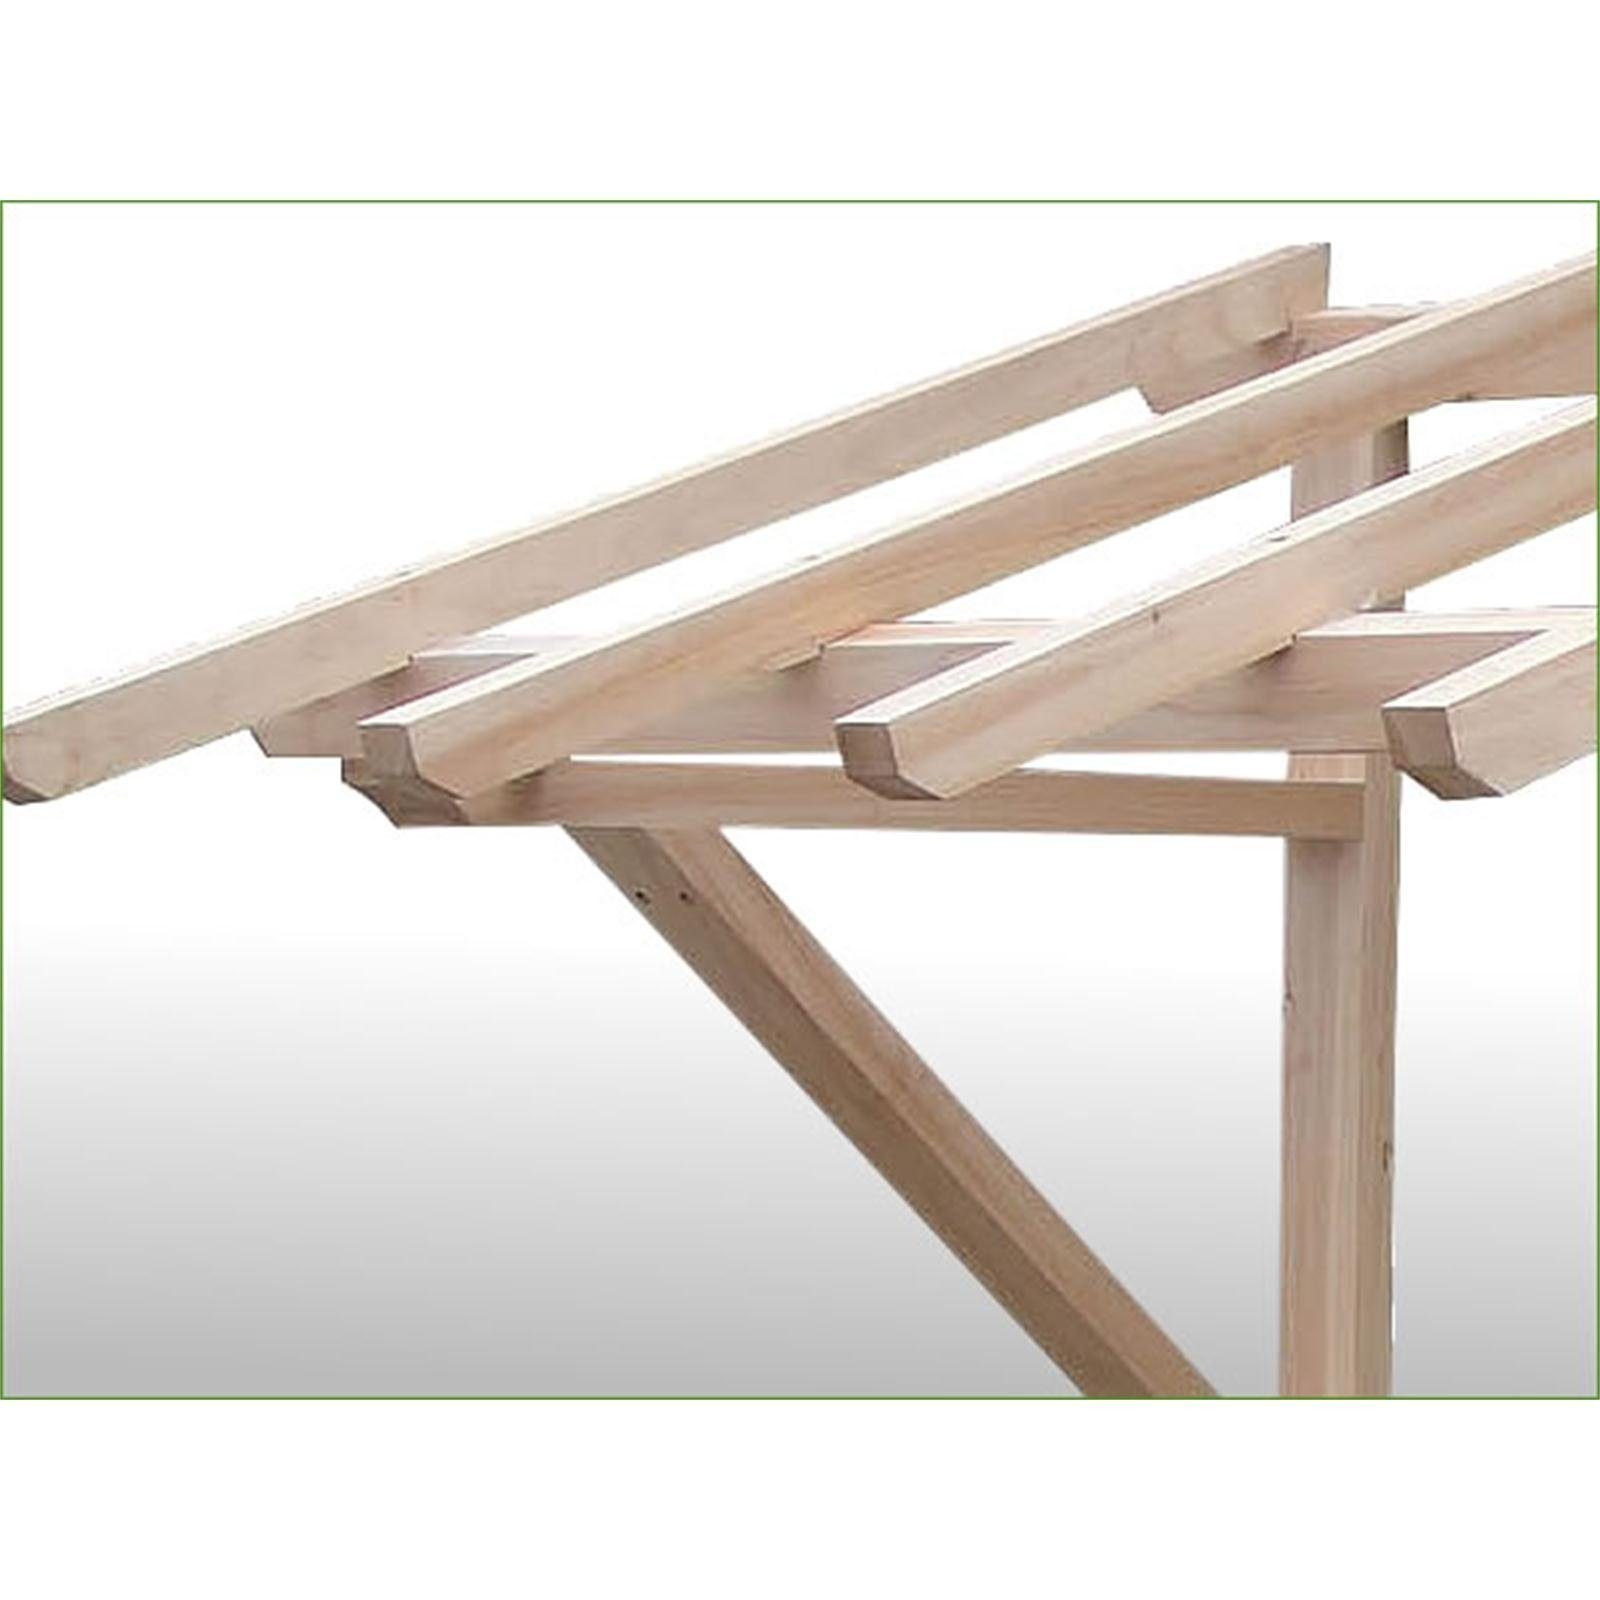 (Stück), Holz Überdachung Melko Pultvordach Unbehandelt aus 2050 Haustürvordach Pultvordach NEU mm cm Türdach 205